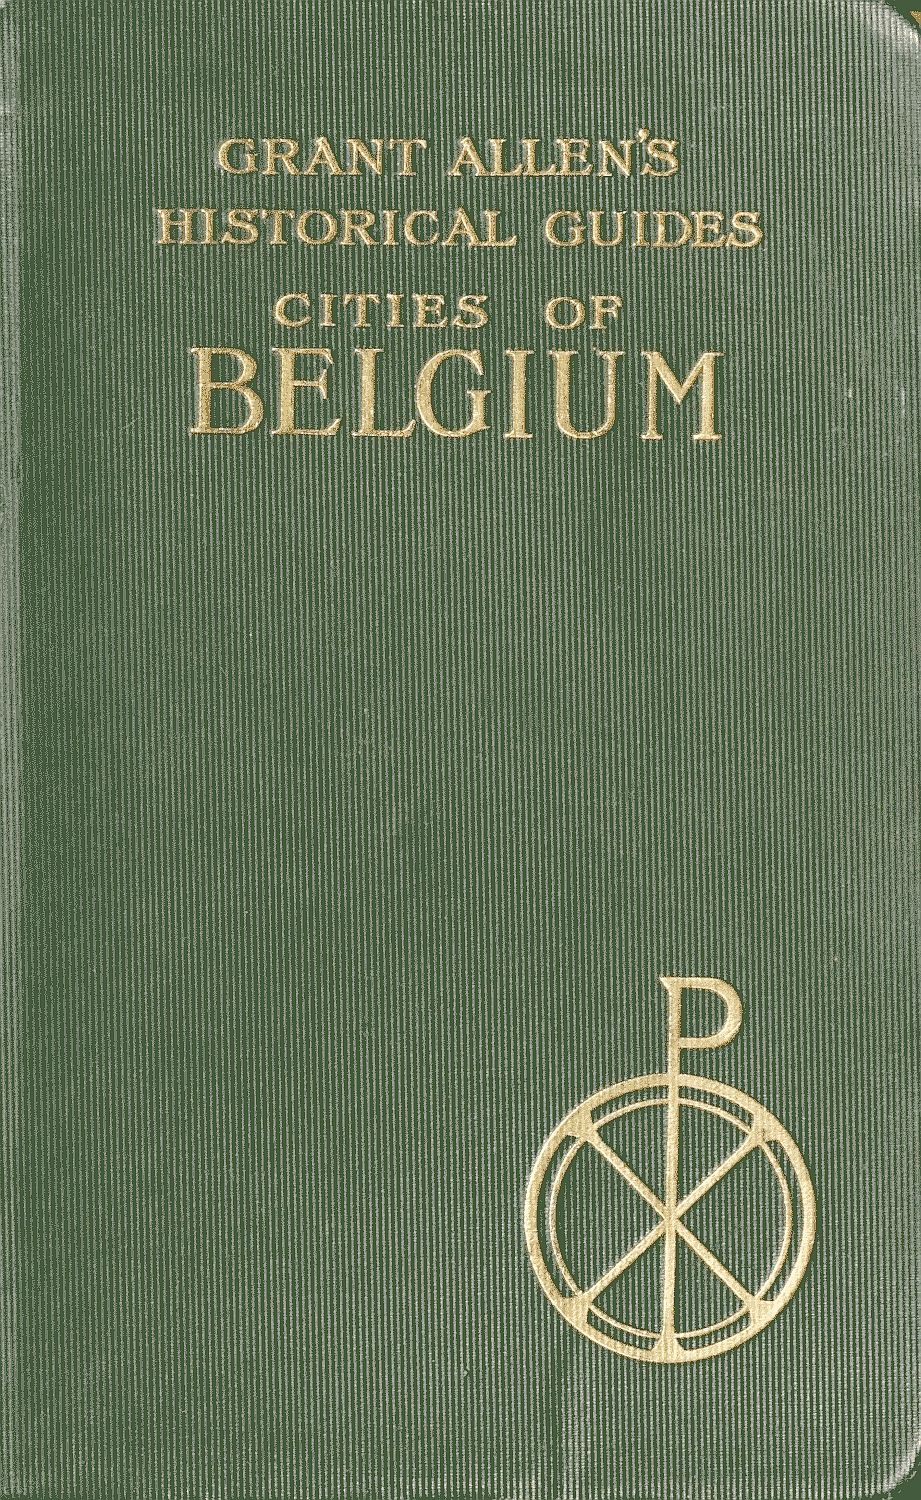 Grant Allen's Historical Guides: Cities of Belgium (Grant Richards) (image)